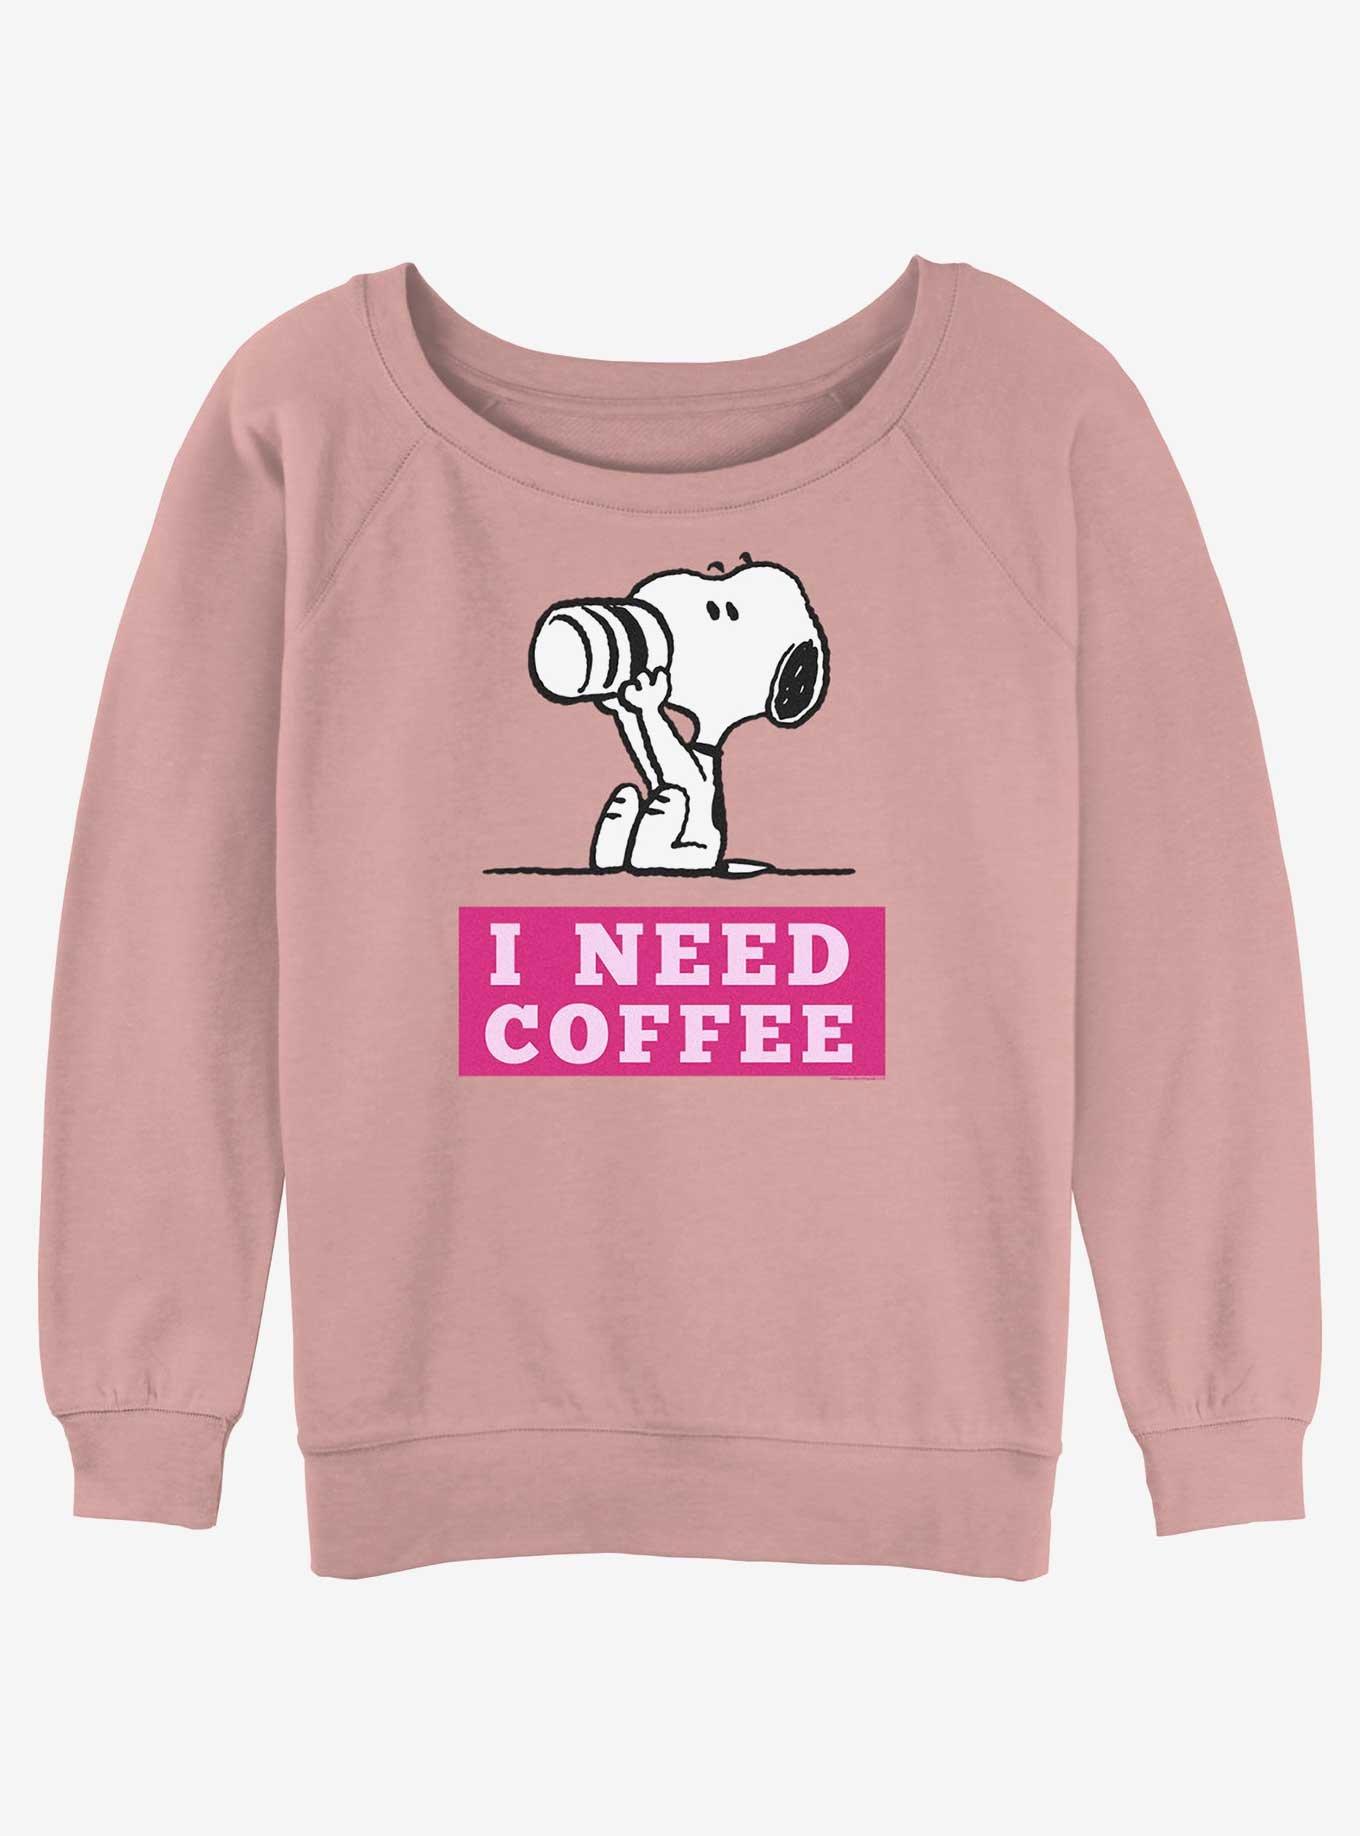 Peanuts Snoopy I Need Coffee Girls Slouchy Sweatshirt